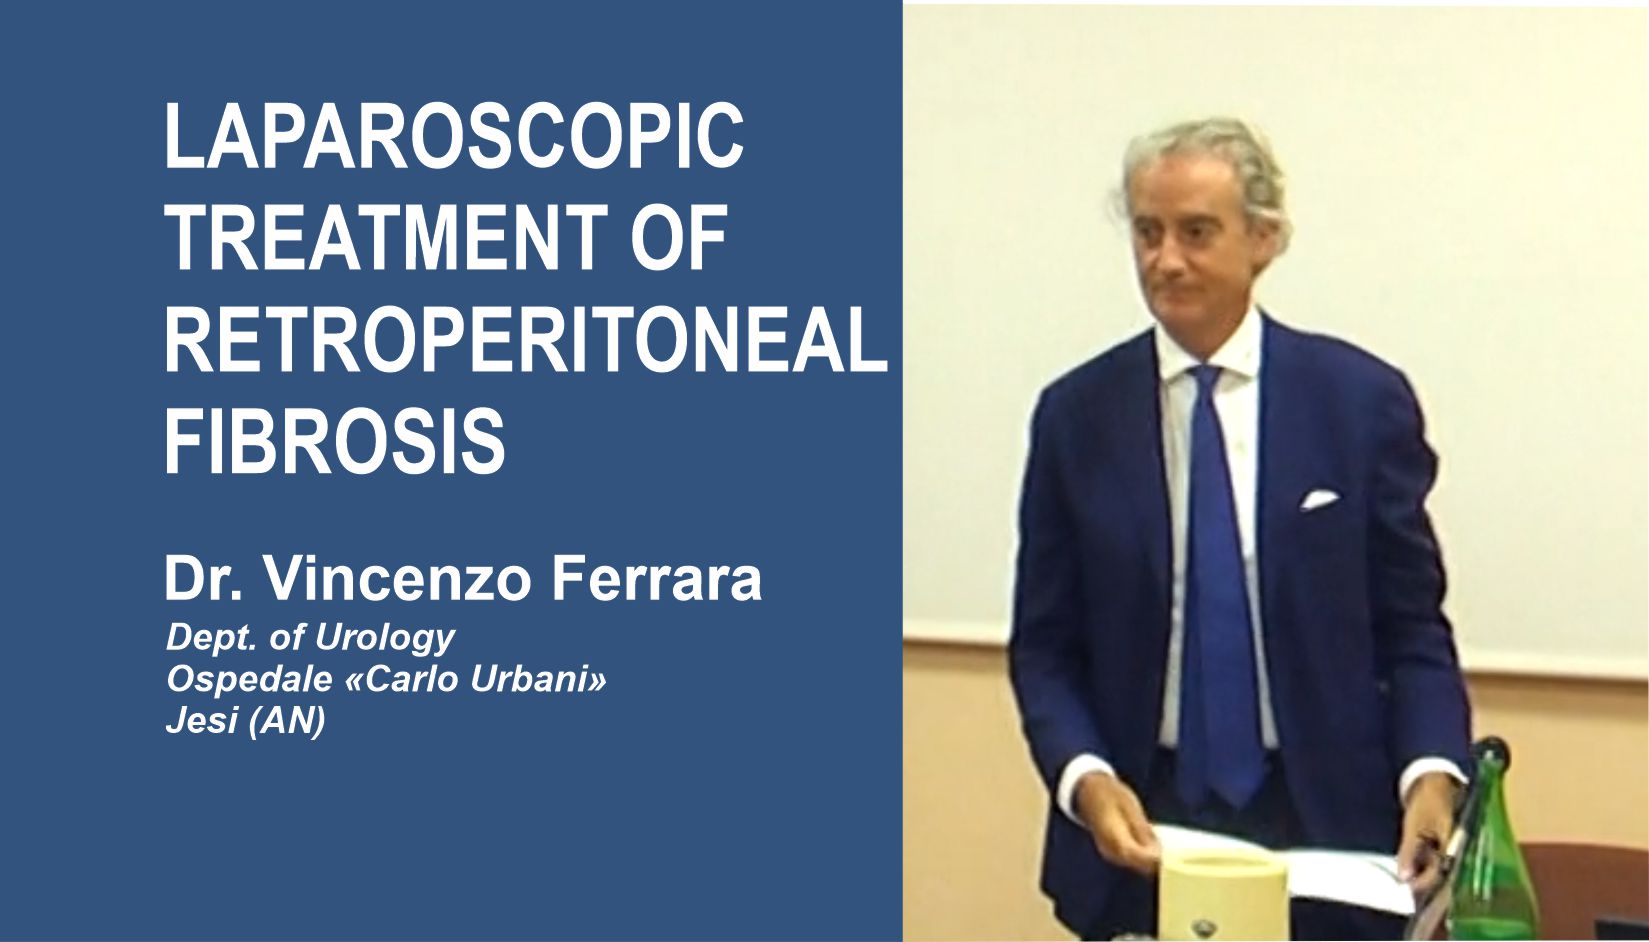 Introductory Image to "Laparoscopic Treatment of Retroperitoneal Fibrosis"